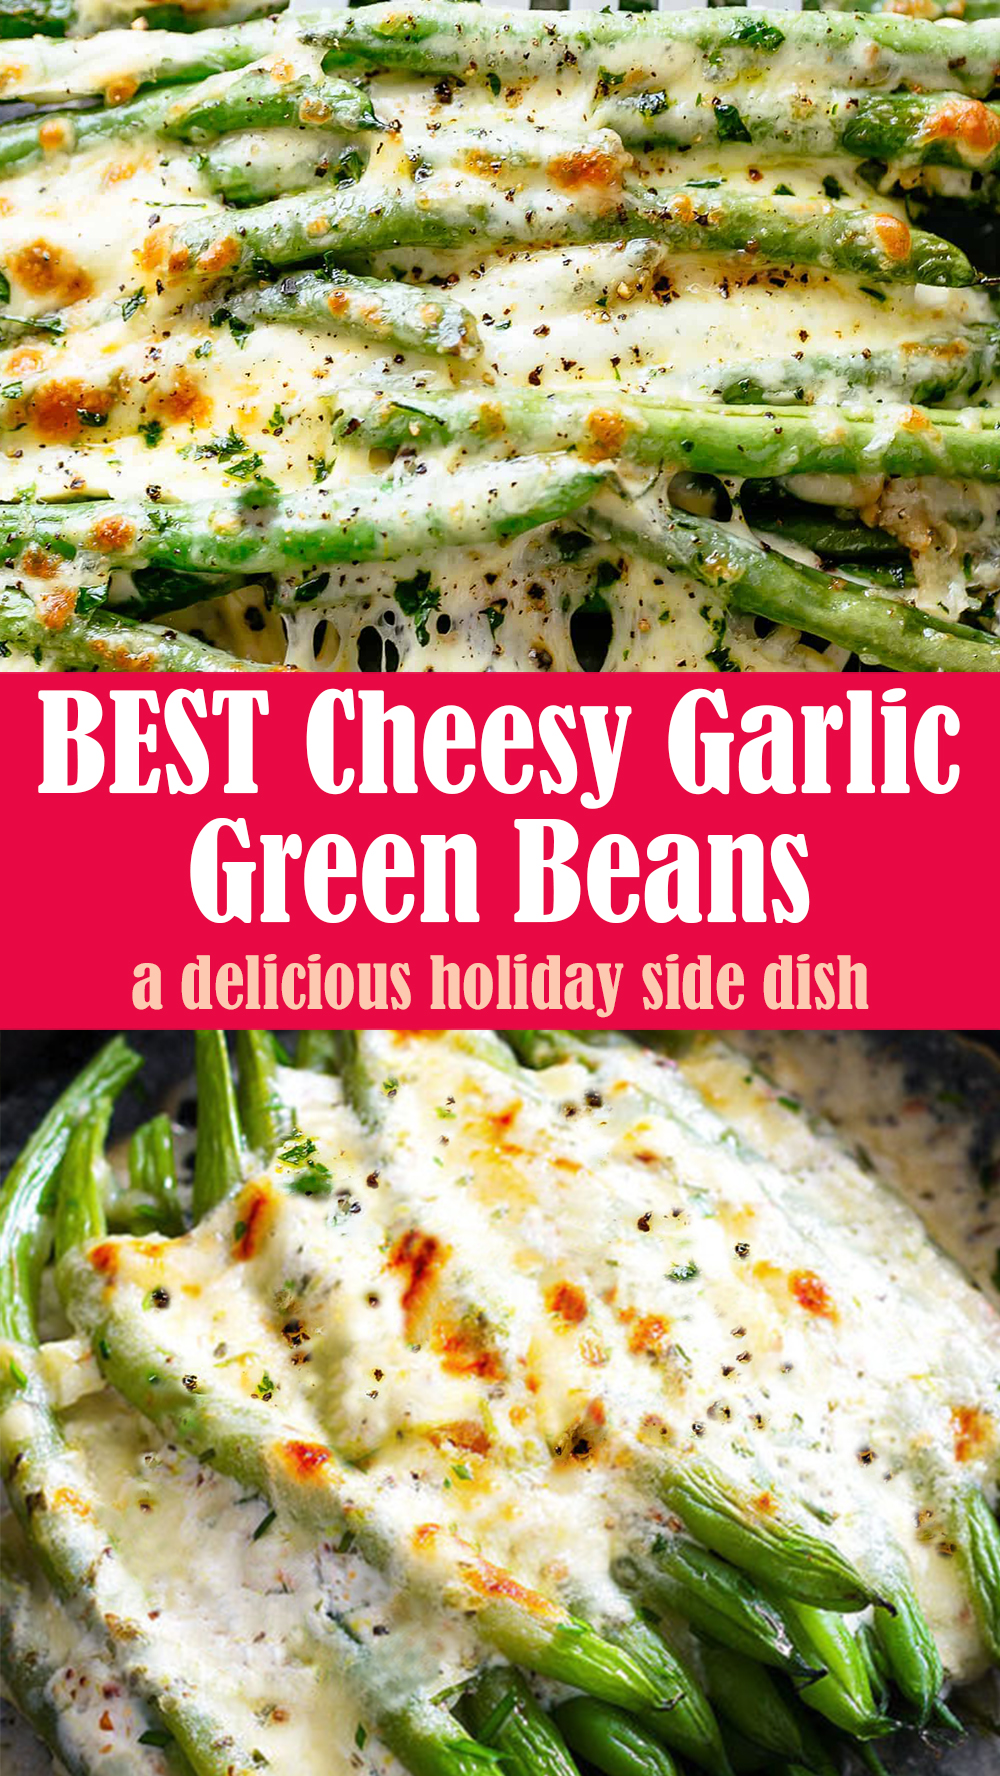 BEST Cheesy Garlic Green Beans